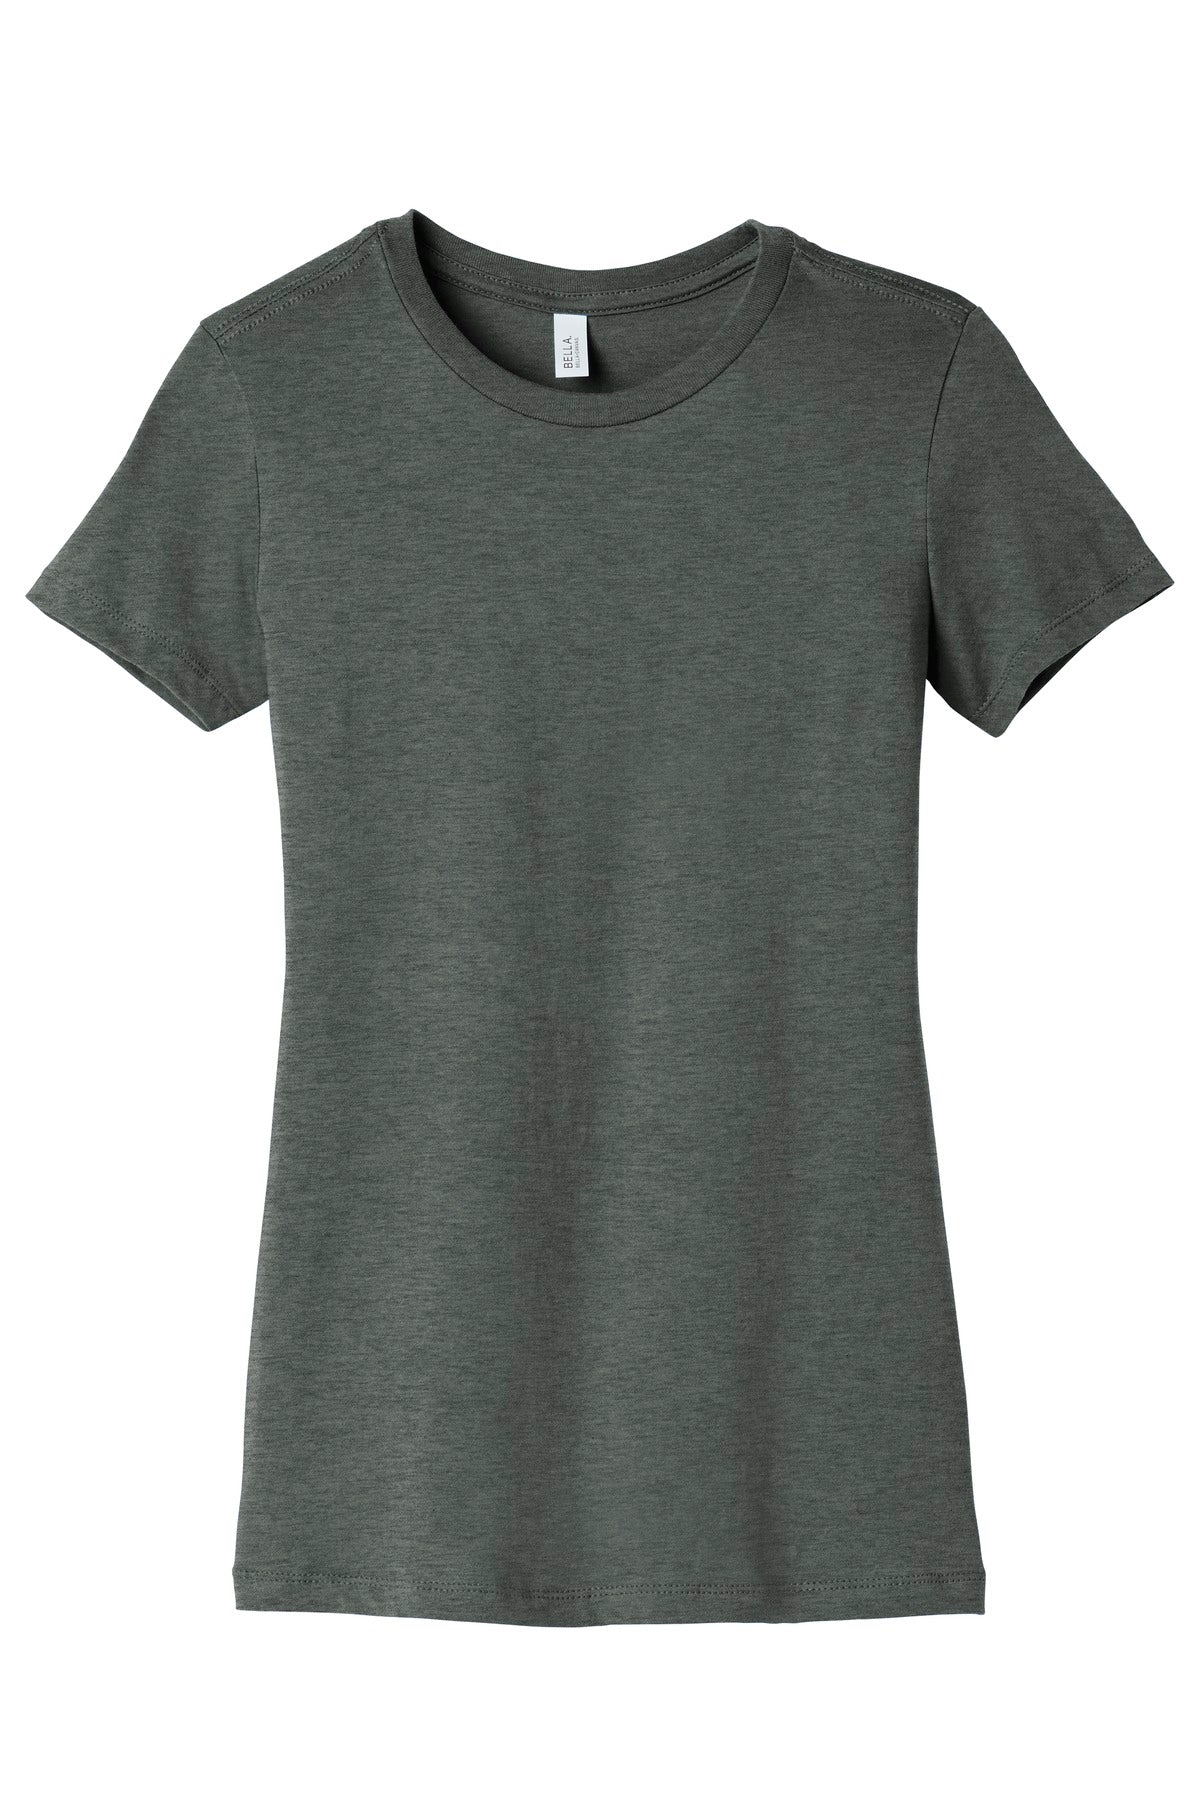 BELLA+CANVAS Women's Slim Fit Tee. BC6004 - BT Imprintables Shirts